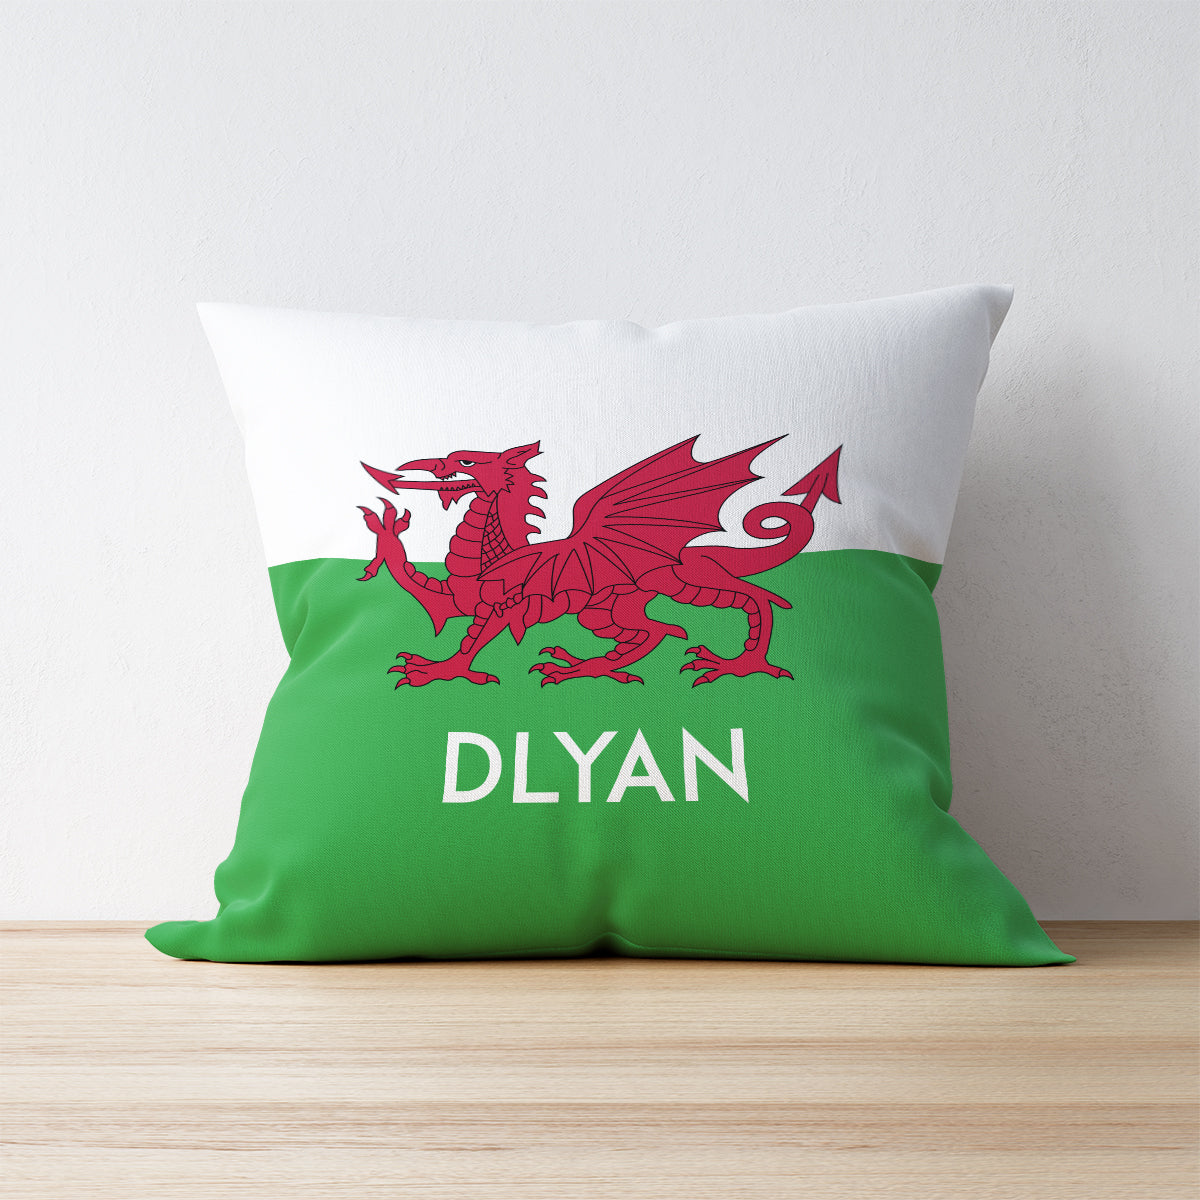 Personalised Wales Cushion